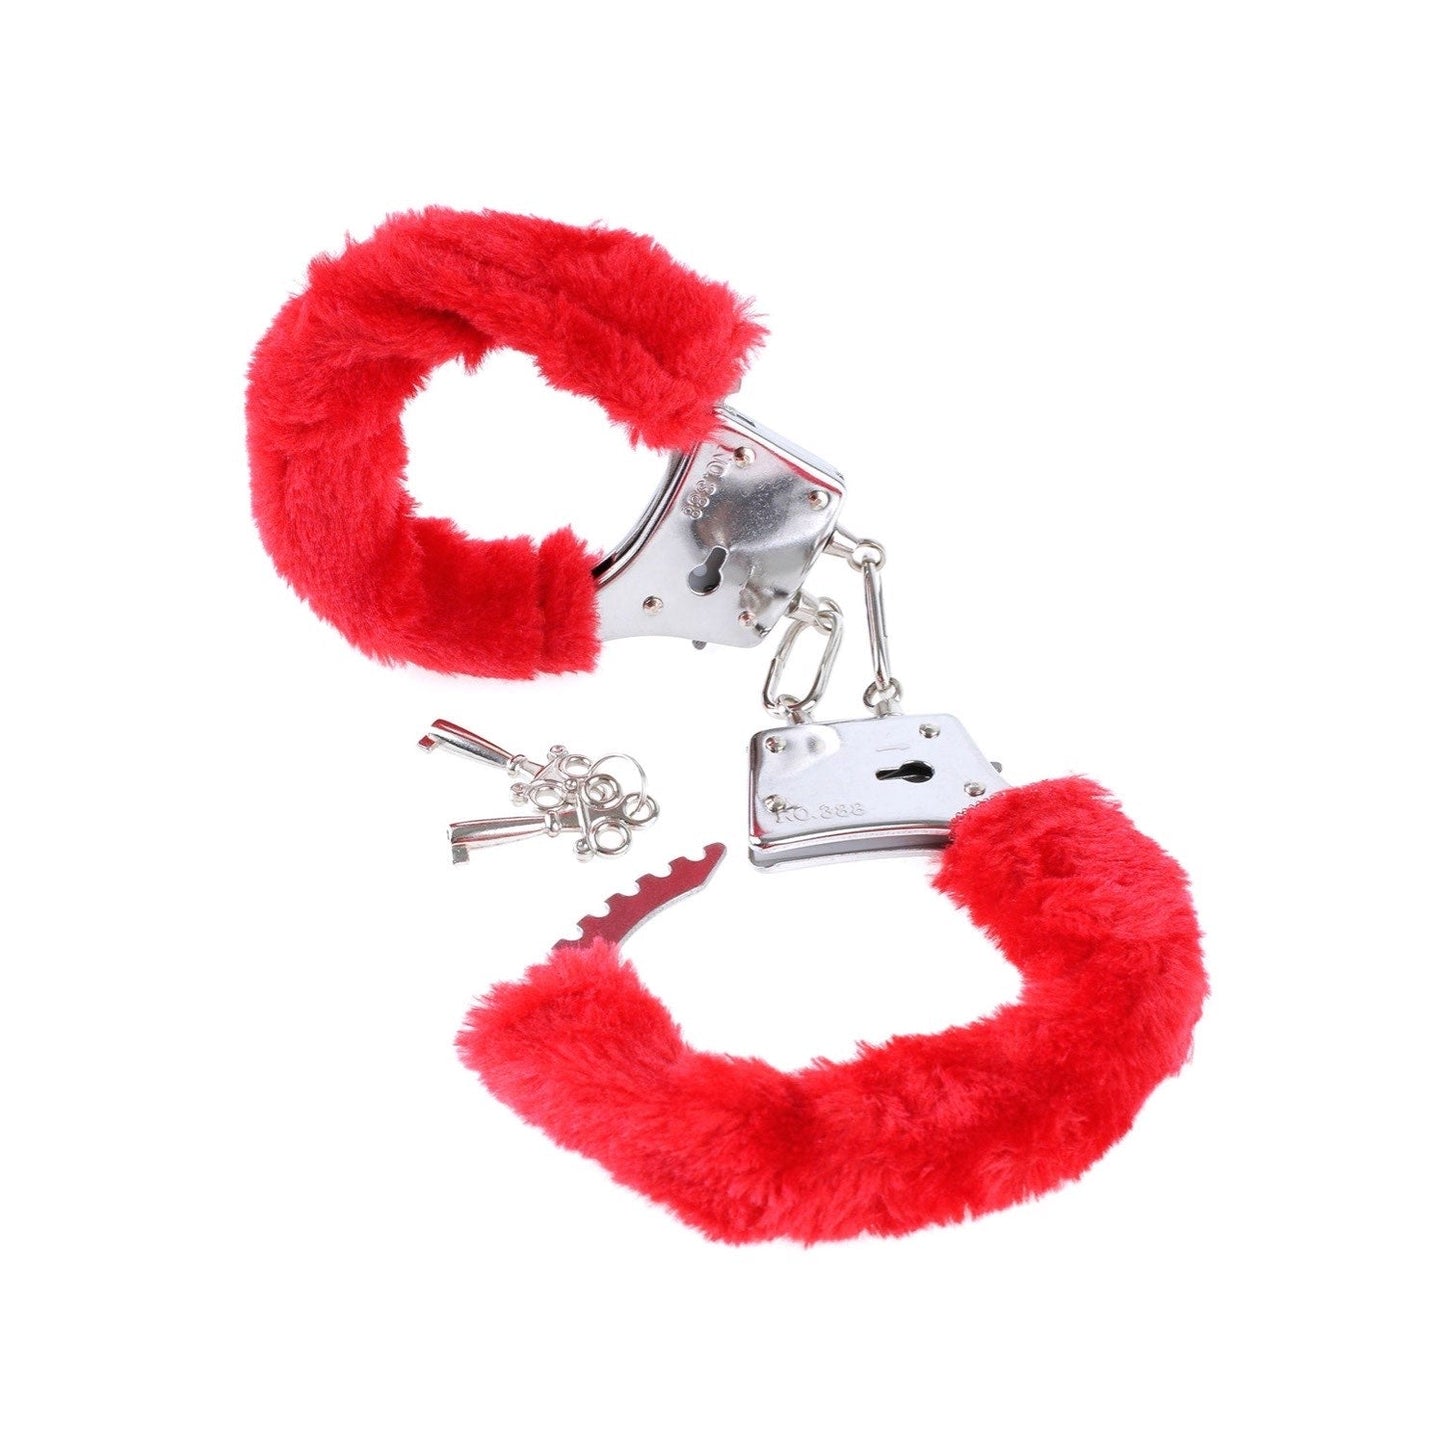 Beginner's Furry Cuffs - Red Fluffy Cuffs